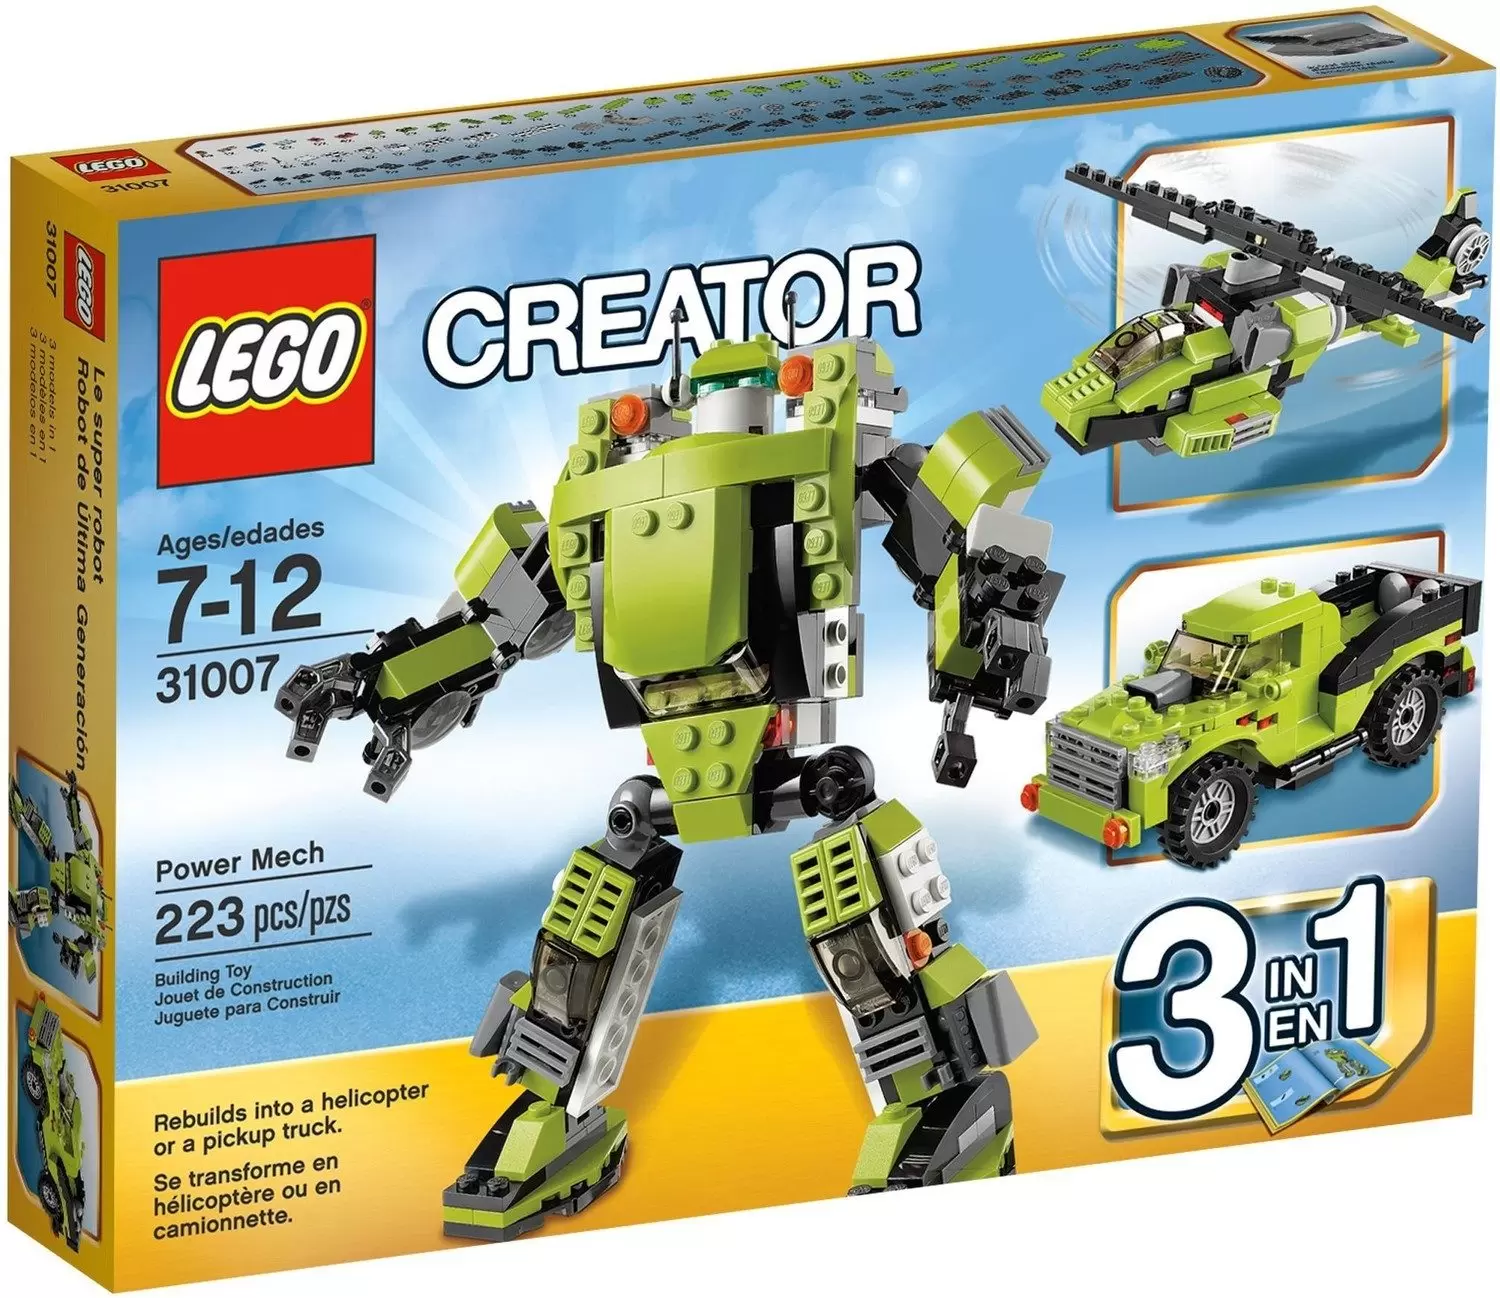 LEGO Creator - Power Mech